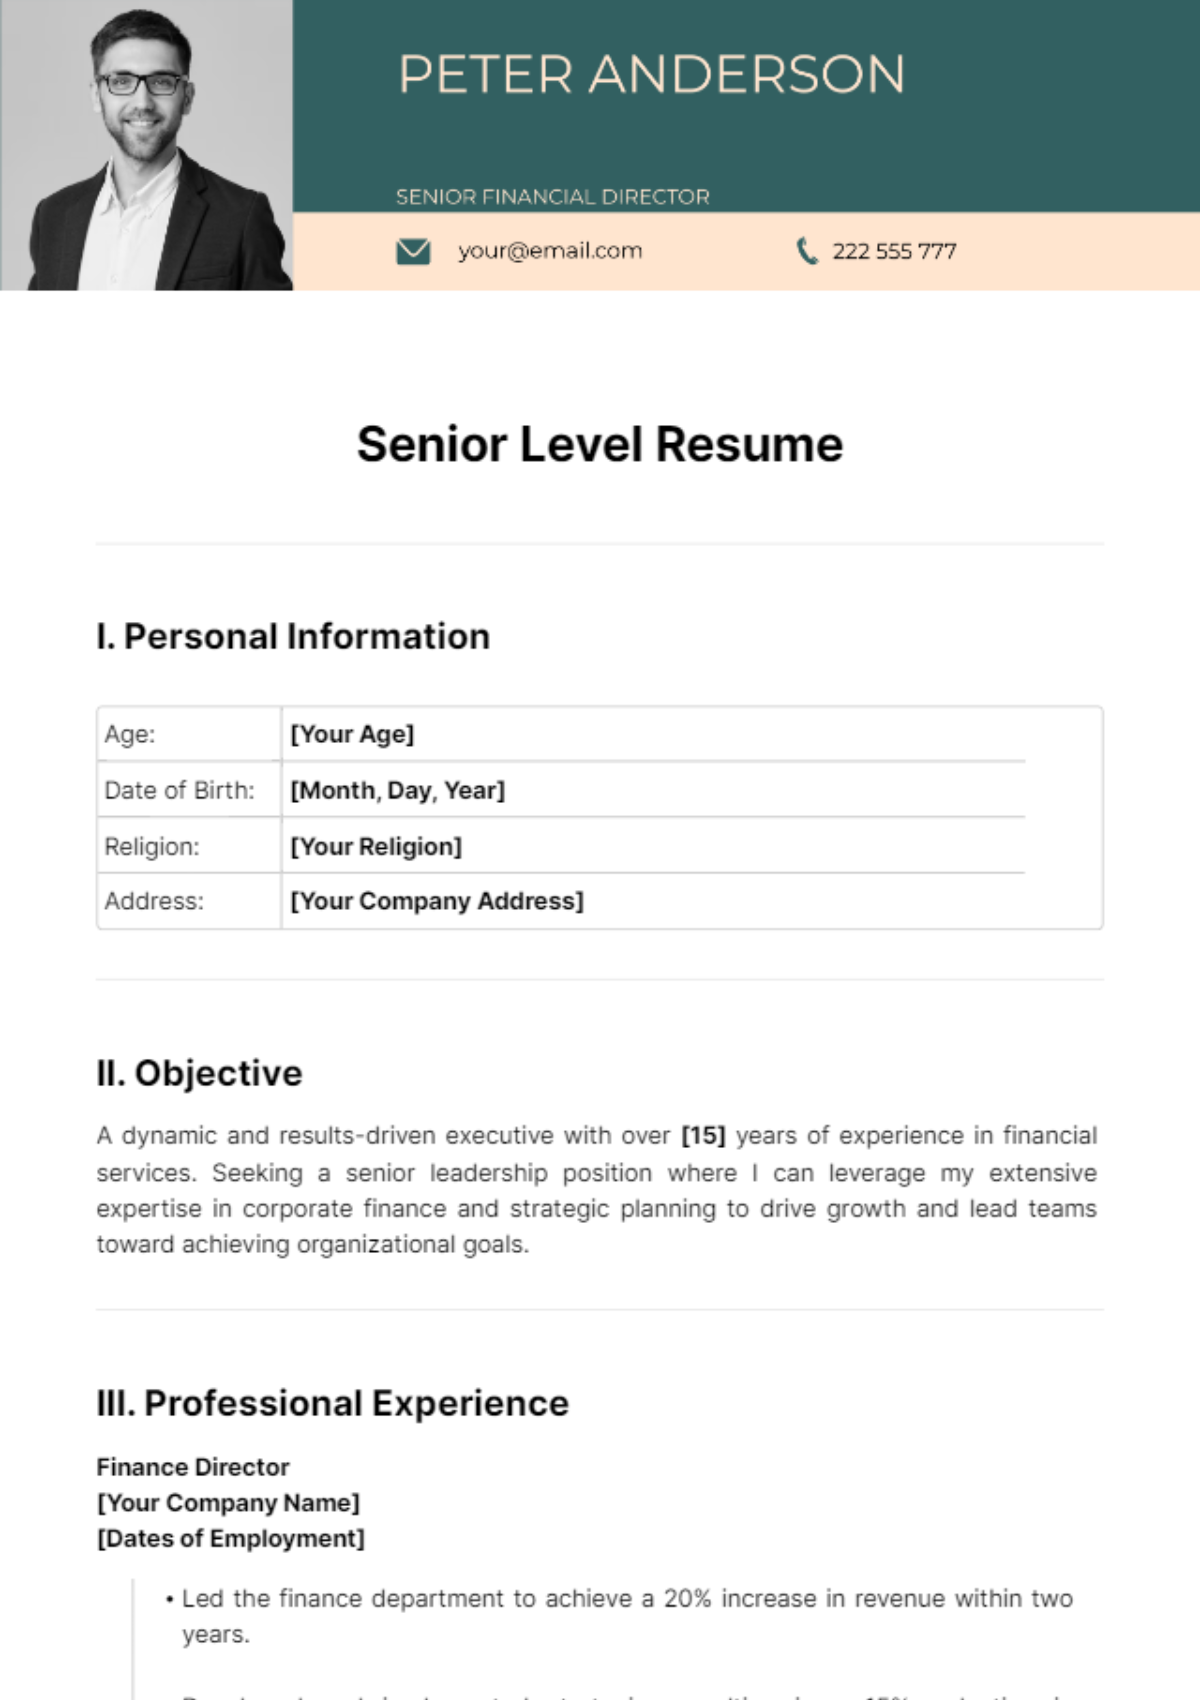 Senior Level Resume Template